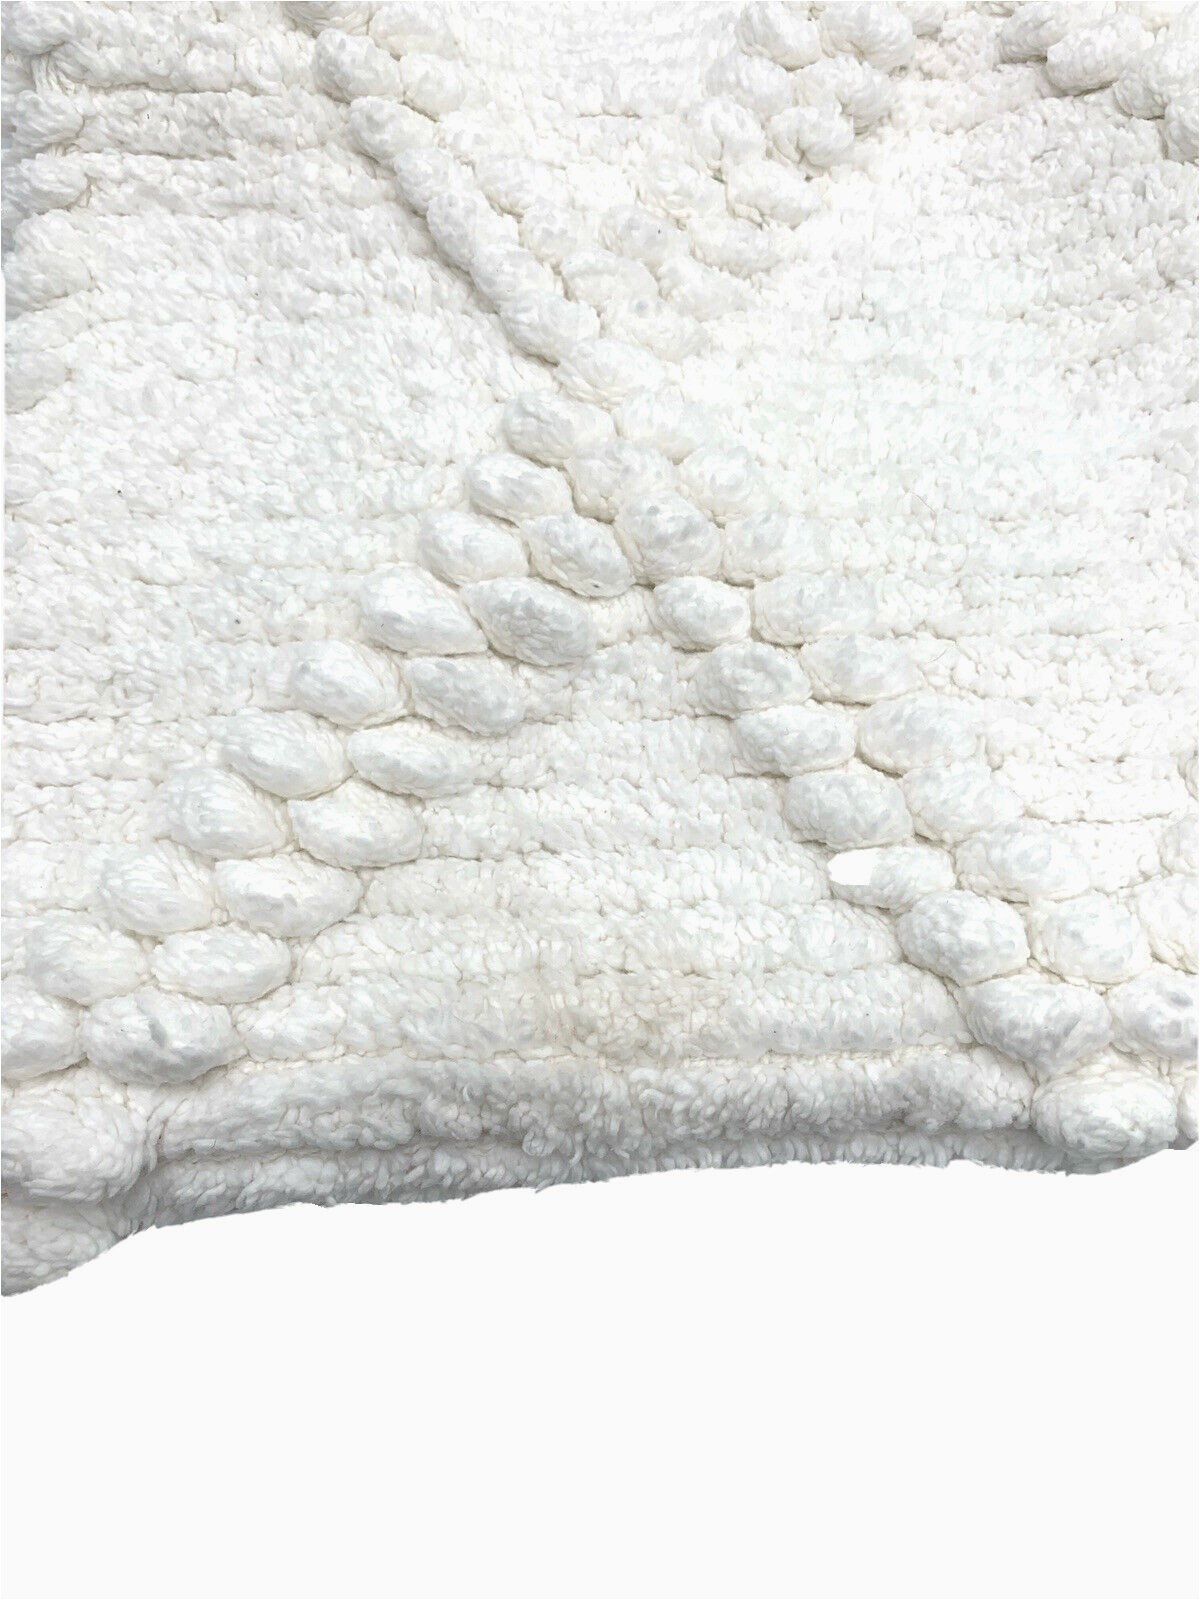 Diamond Handloom Bath Rug Diamond Handloom Bath Rug Cotton In White 24 In X 40 In